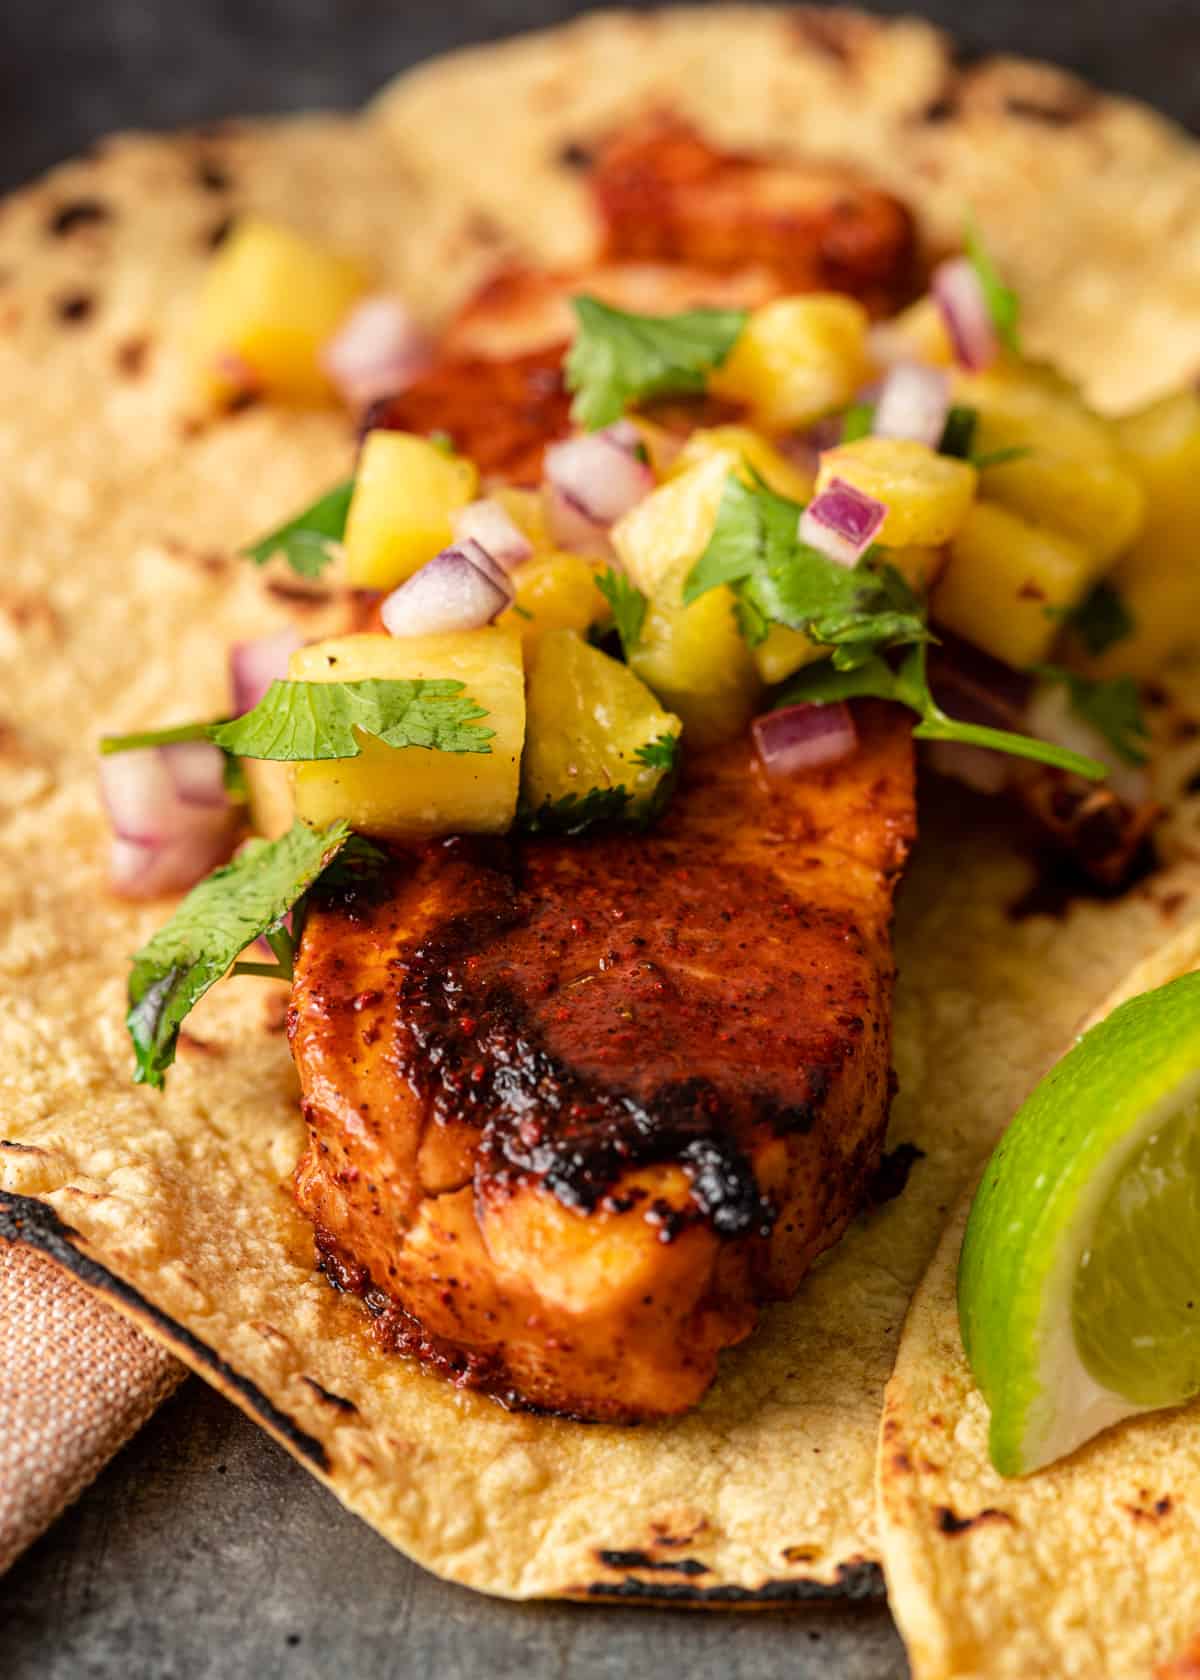 extreme closeup: tacos de pescado with pineapple salsa on top